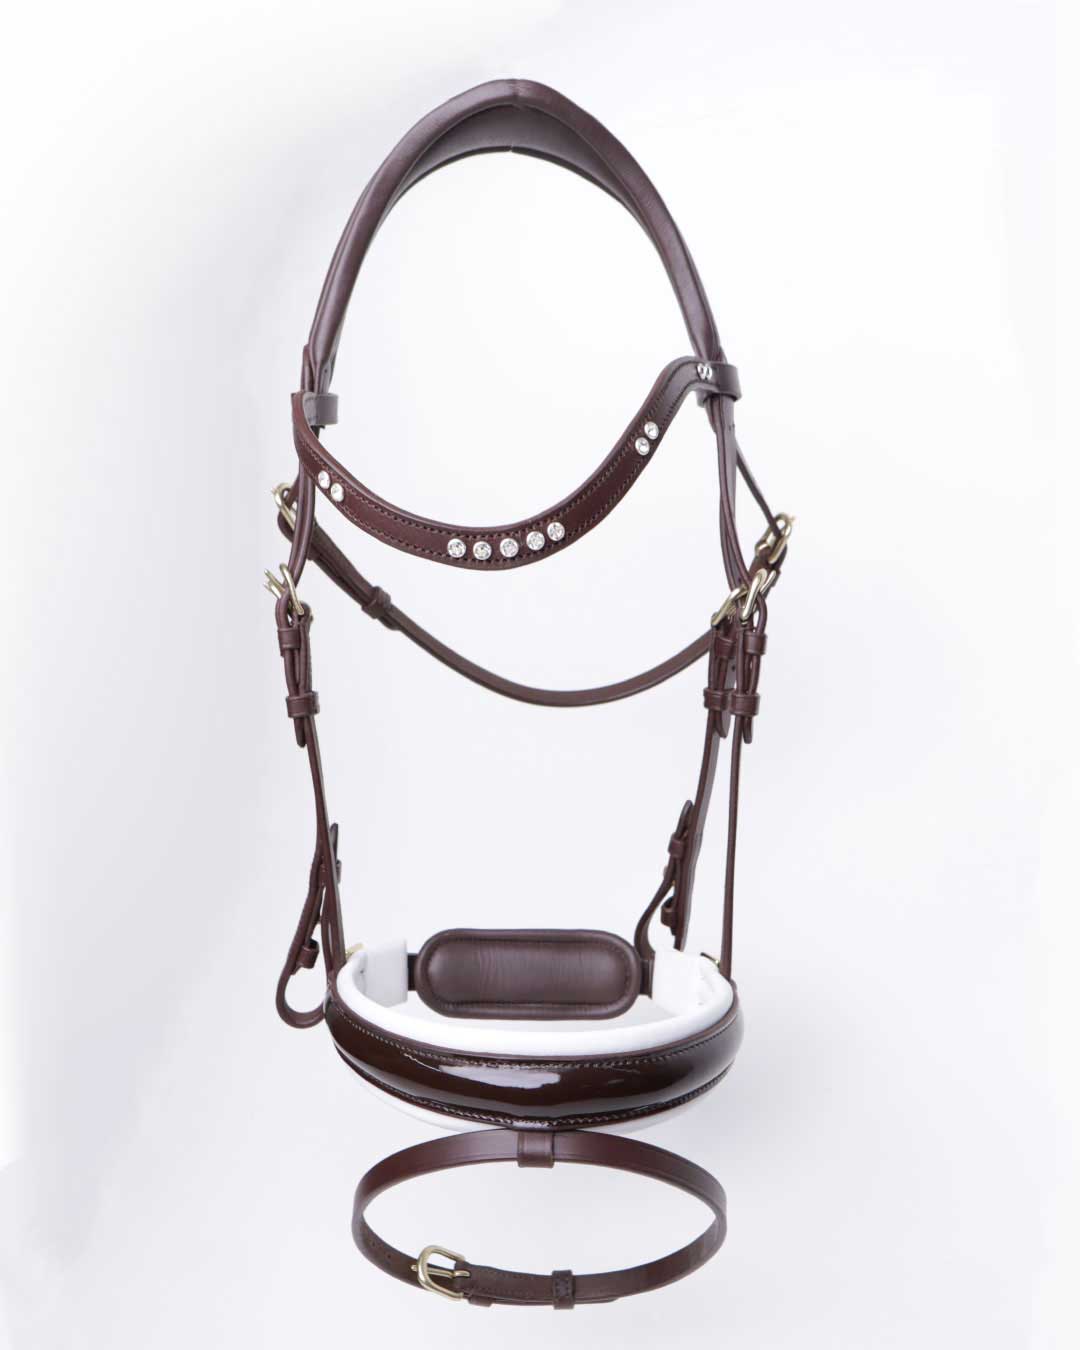 Tajmahal classic dressage flash bridle patent swarovski browband including reins.